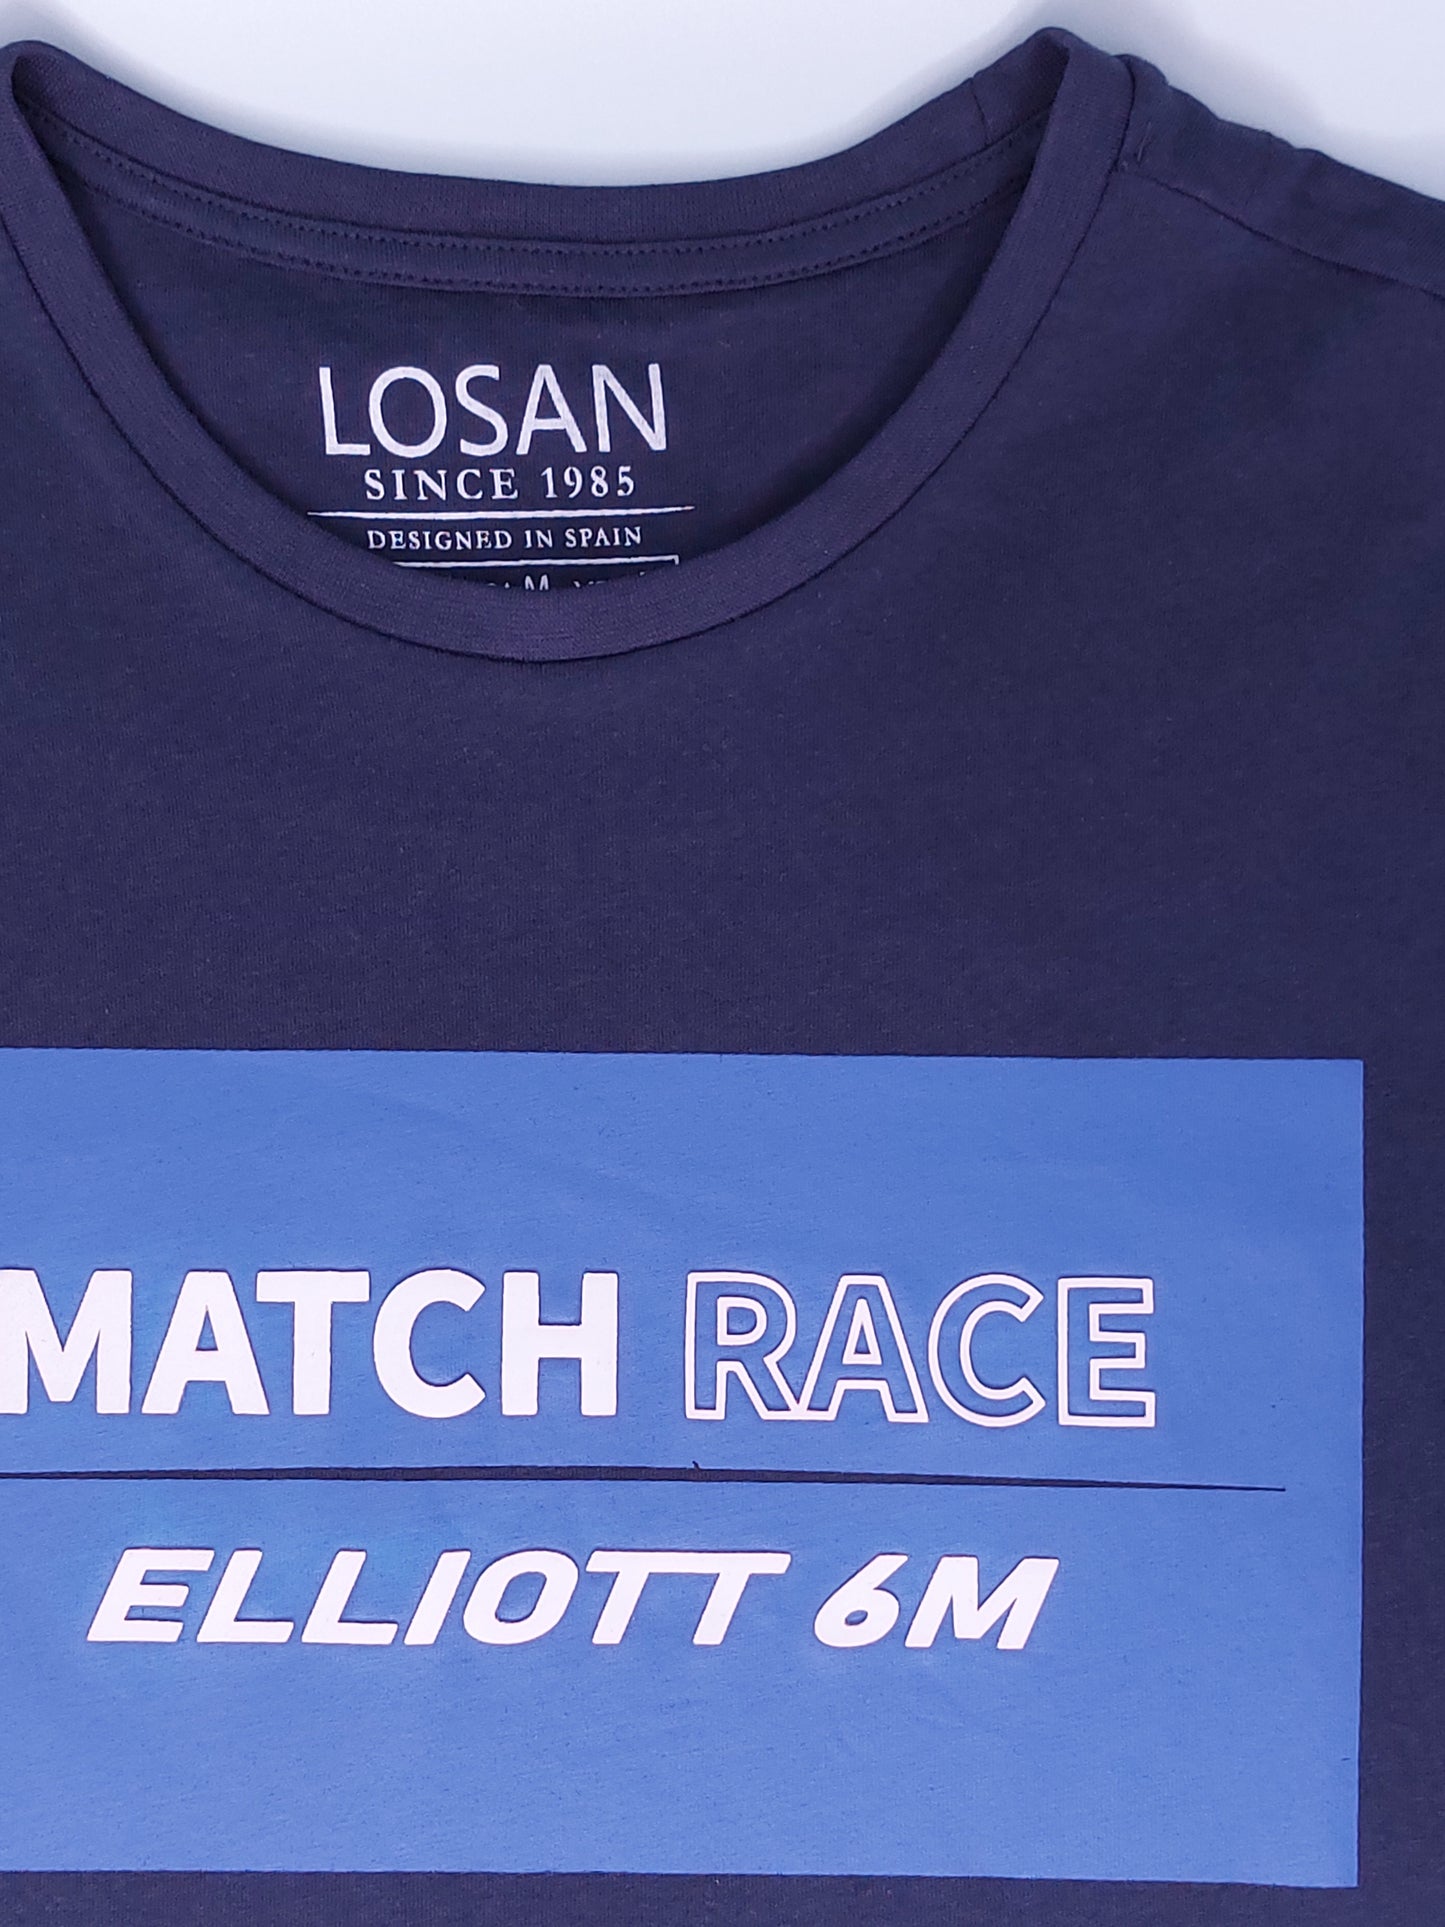 Playera para caballero azul marino "MATCH RACE ELLIOTT 6M" LOSAN.